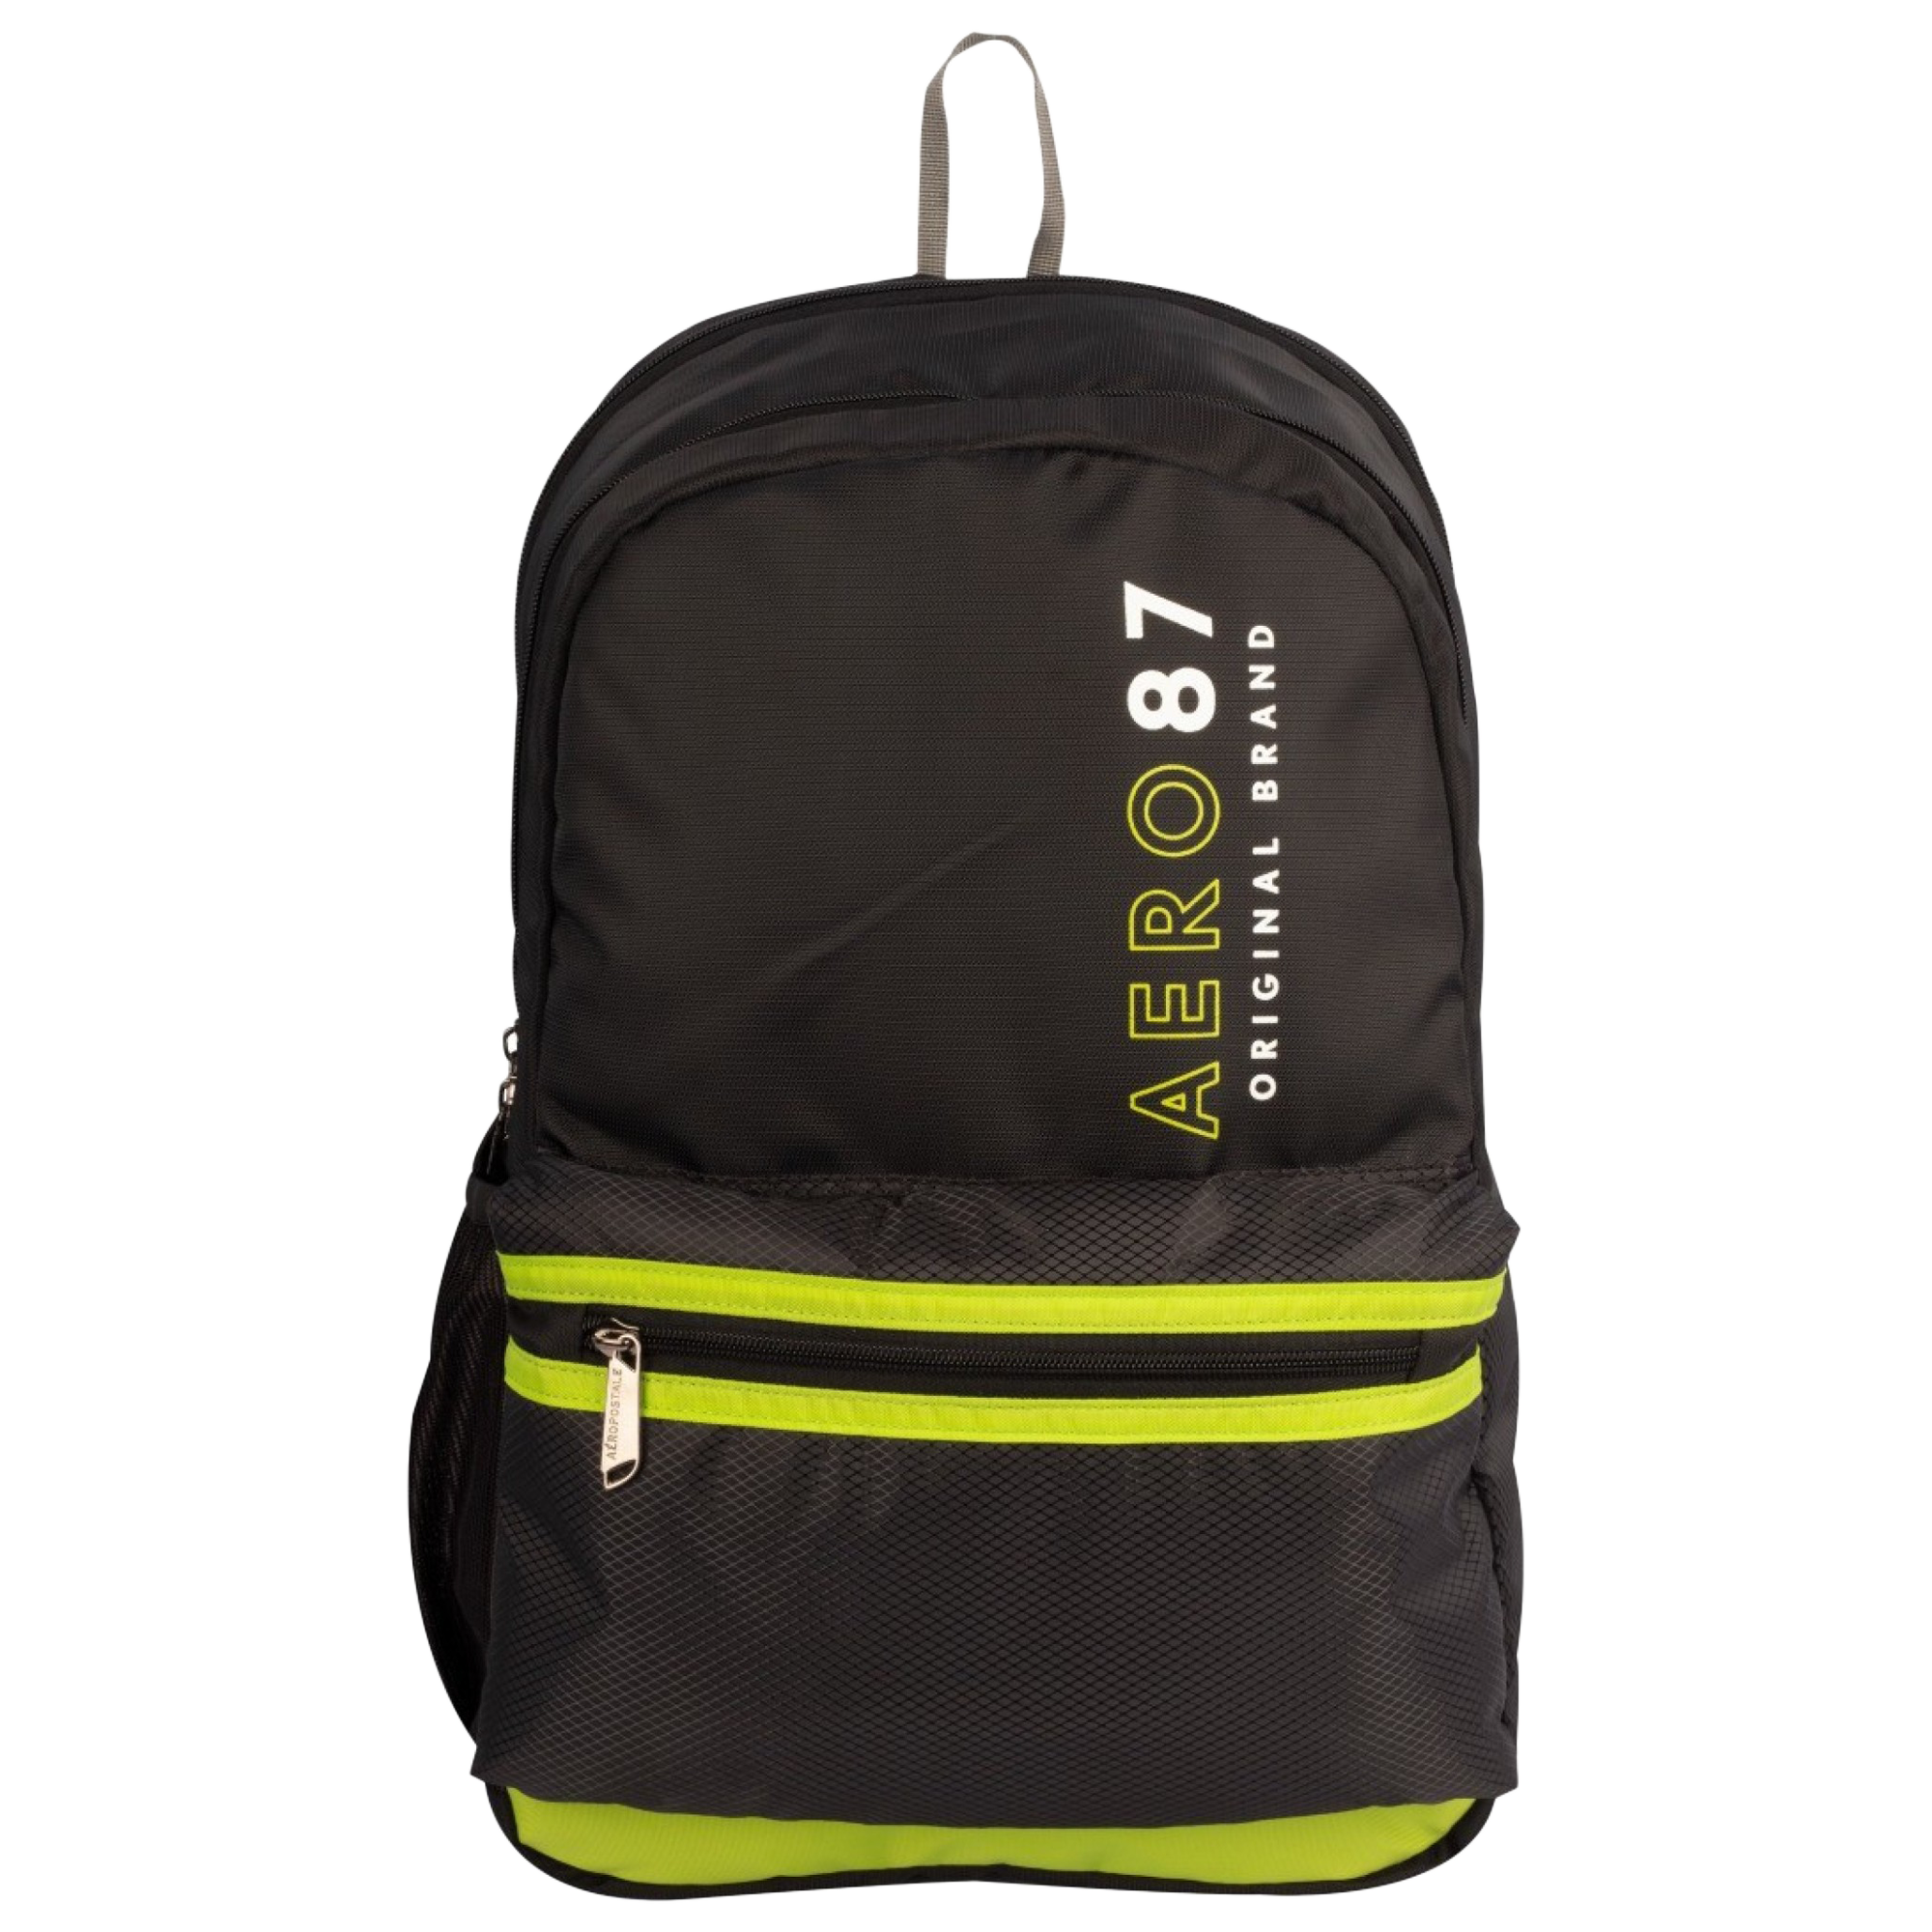 Aeropostale Take Off 20 Litres Nylon Backpack (Waterproof, AERO-BP-1001-BLK_P, Black/Green)_1